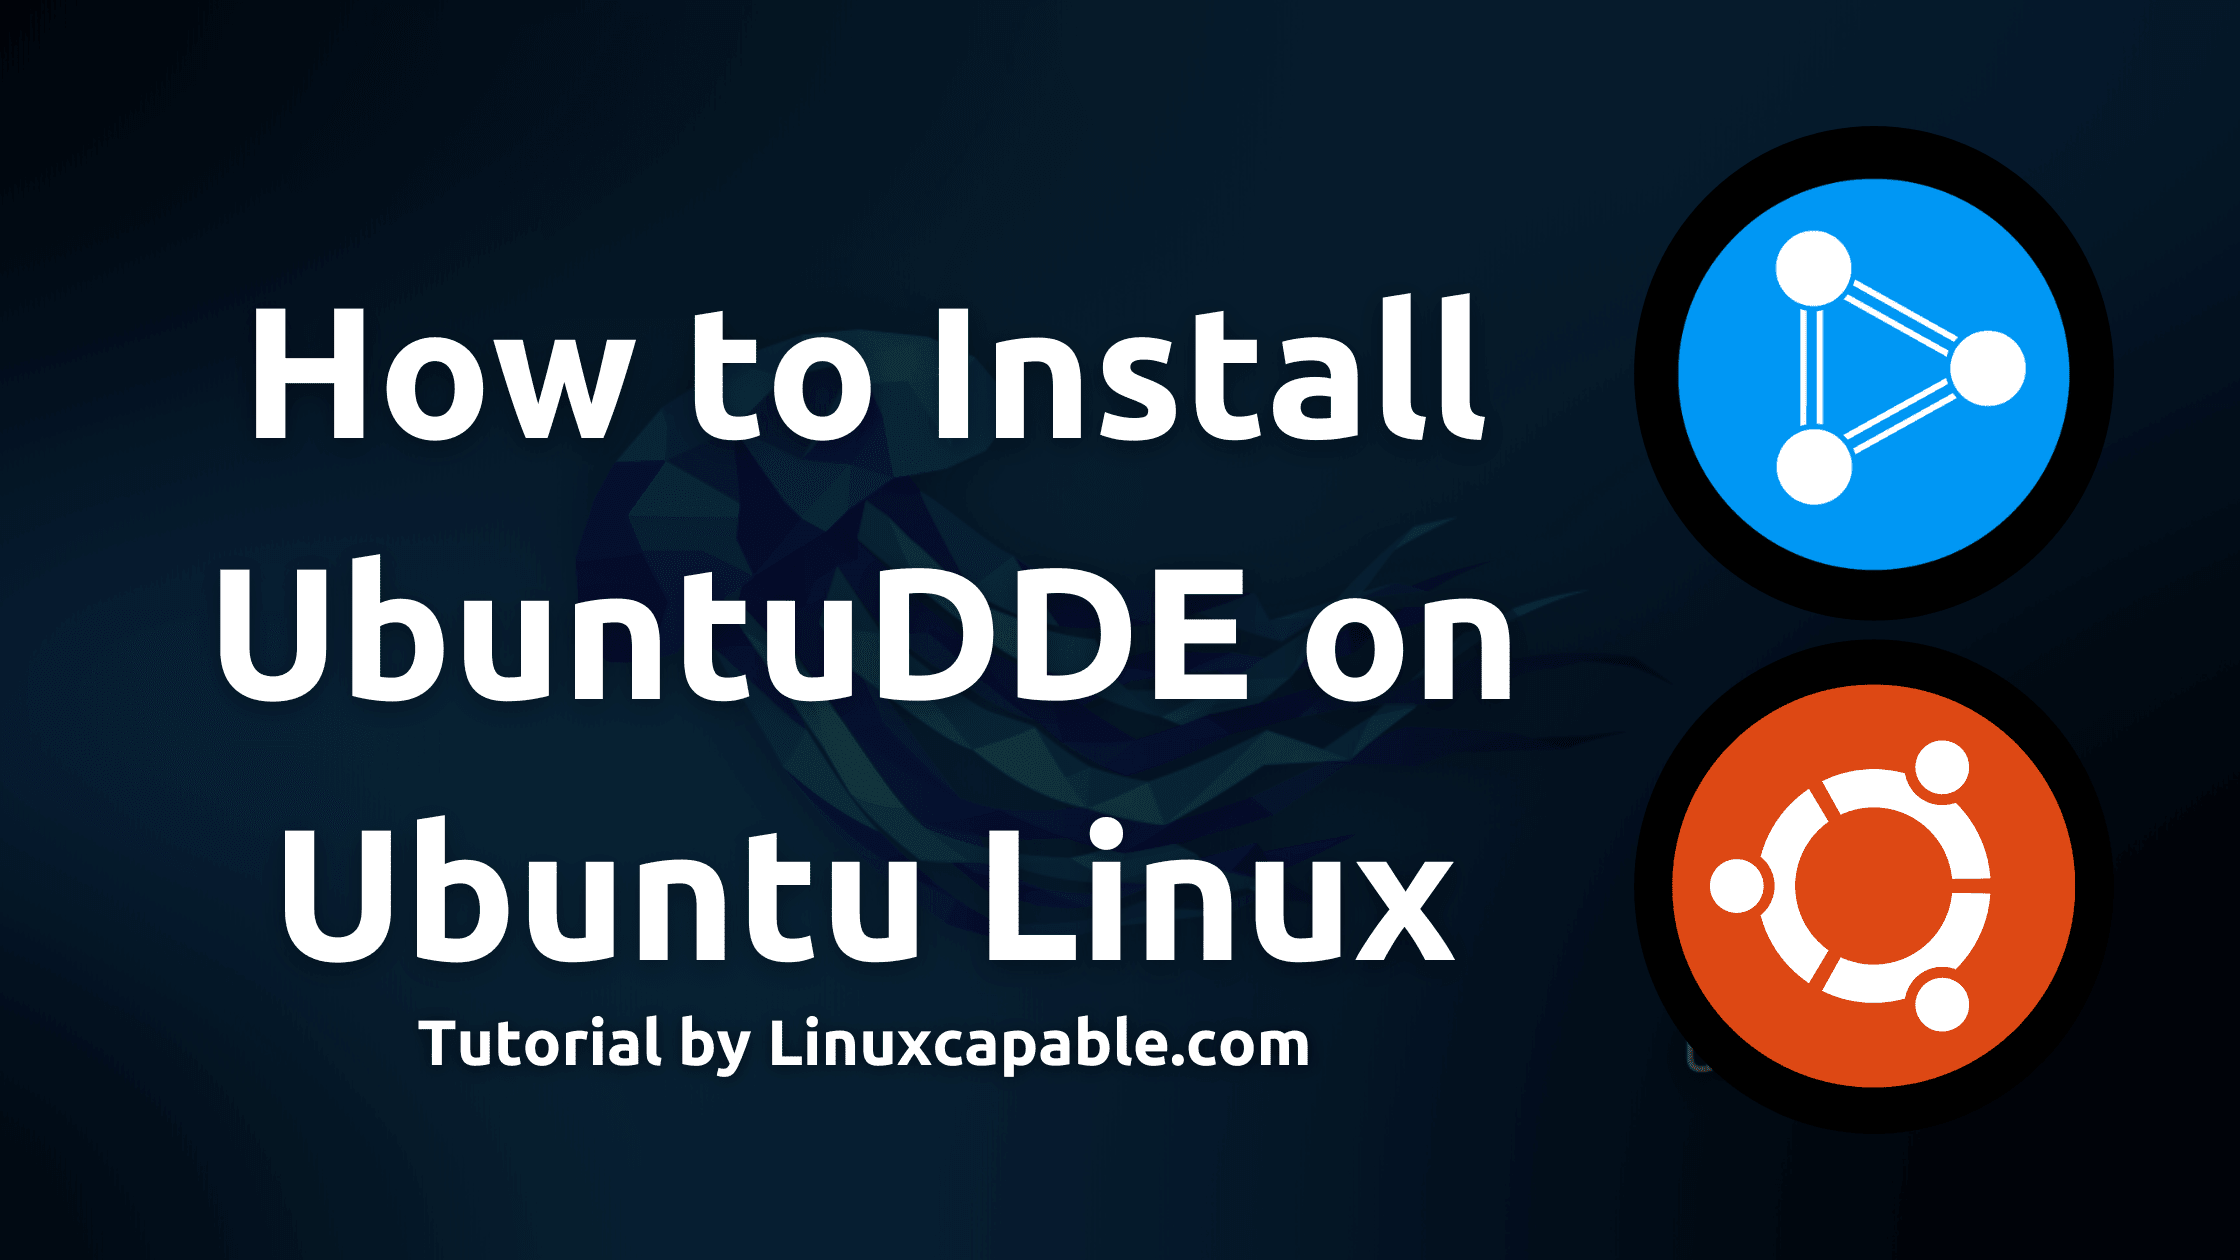 How to Install UbuntuDDE on Ubuntu Linux